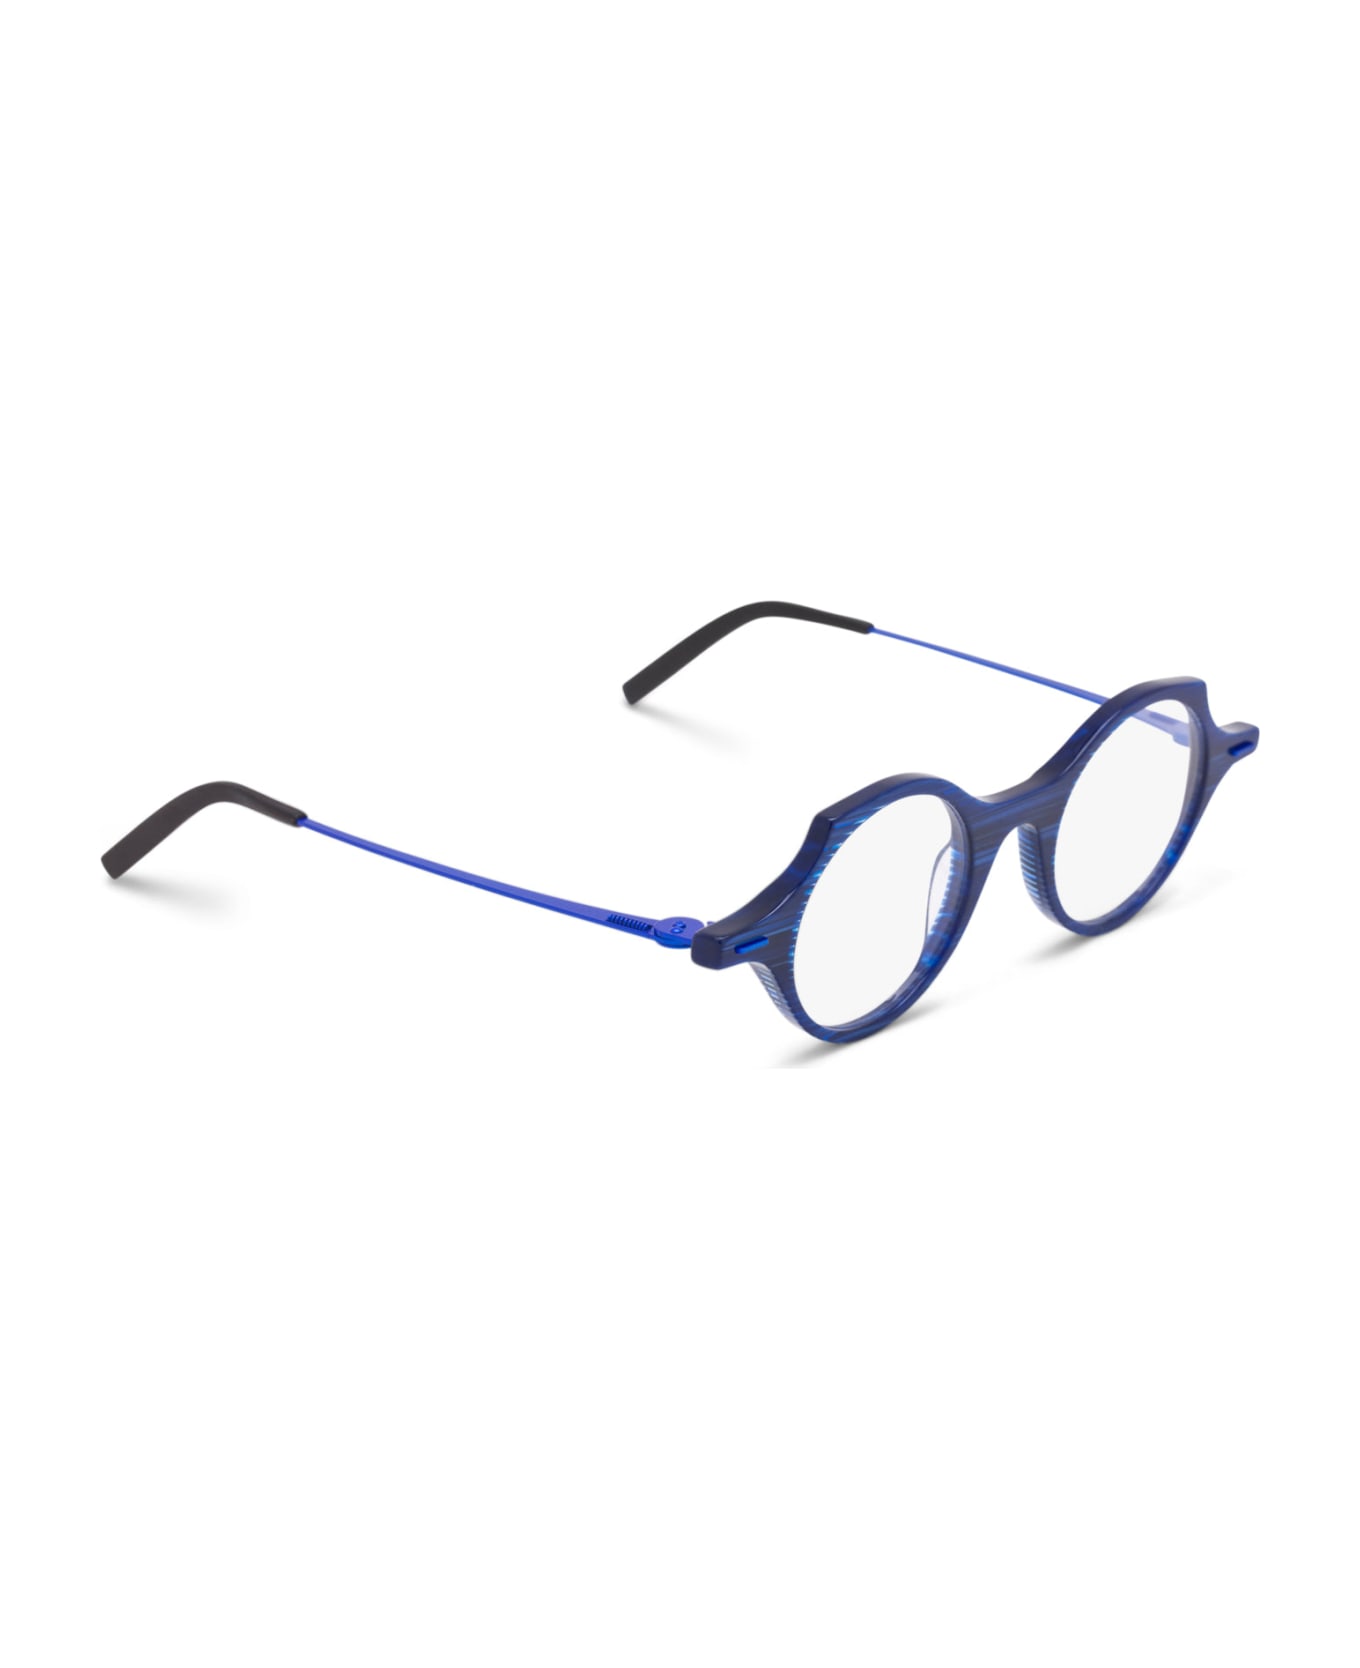 Theo Eyewear Patatas-9 Glasses - electric blue アイウェア